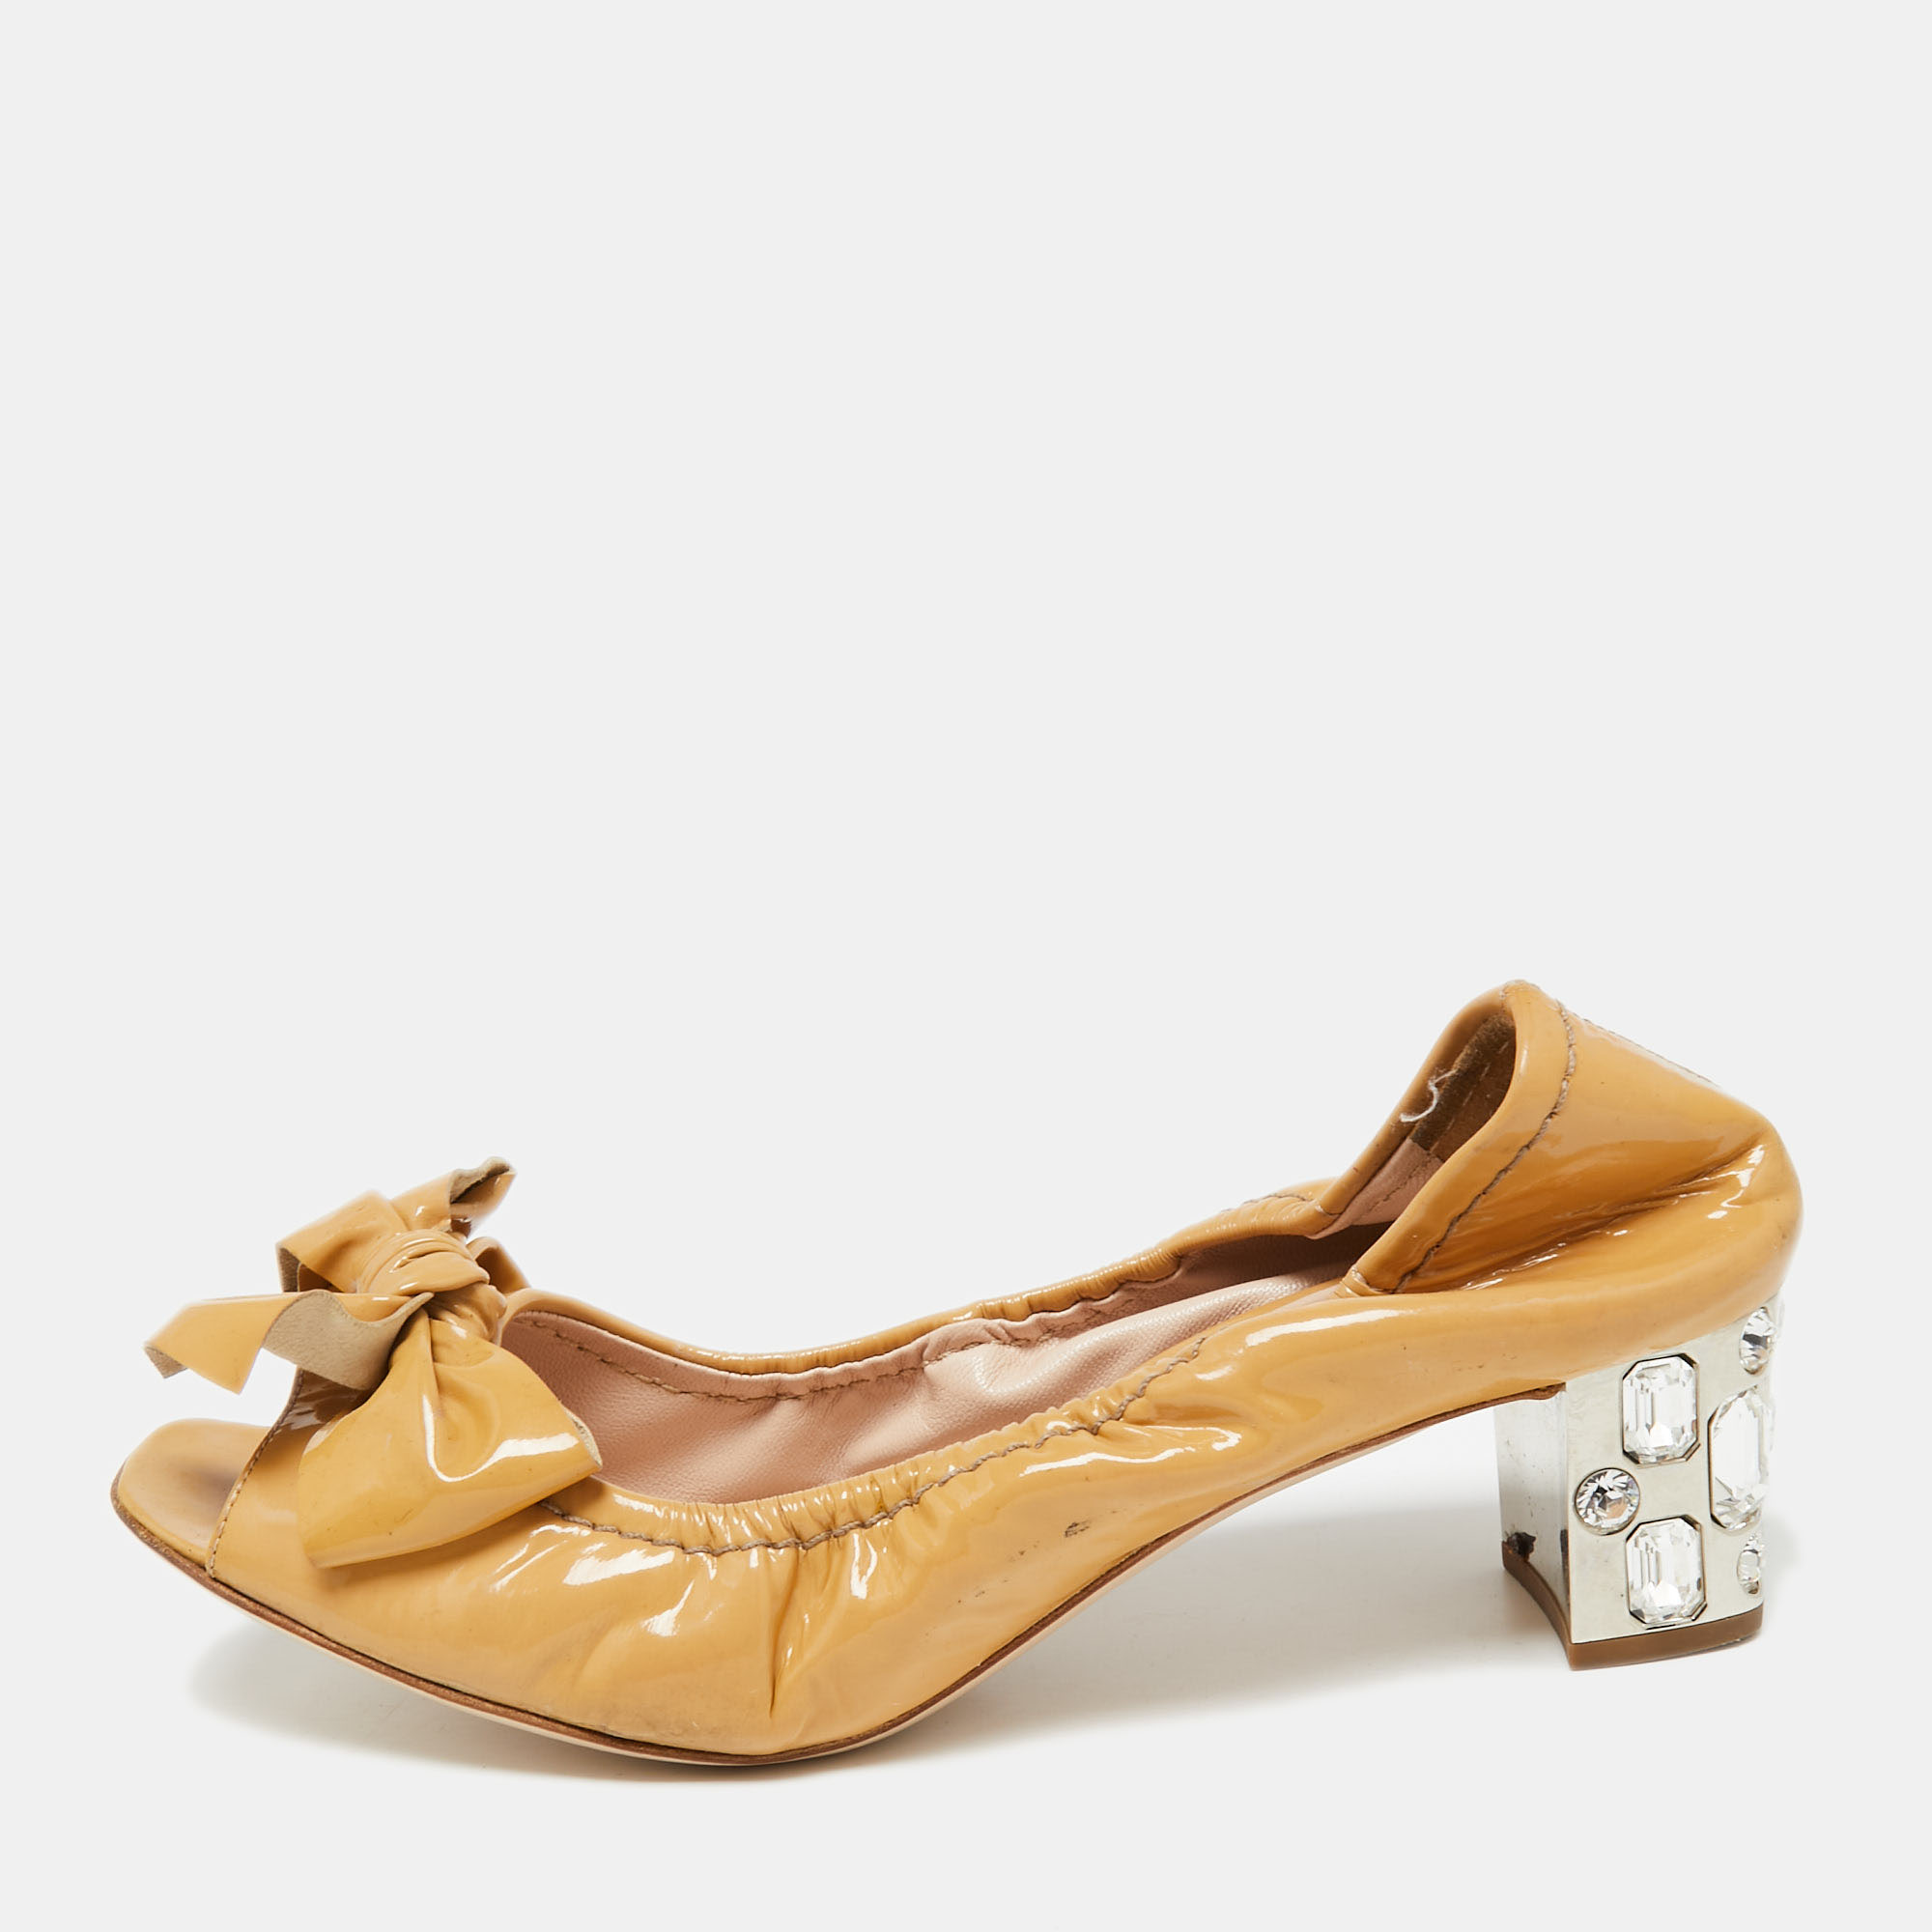 Miu miu beige patent leather bow crystal studded heel peep-toe pumps size 38